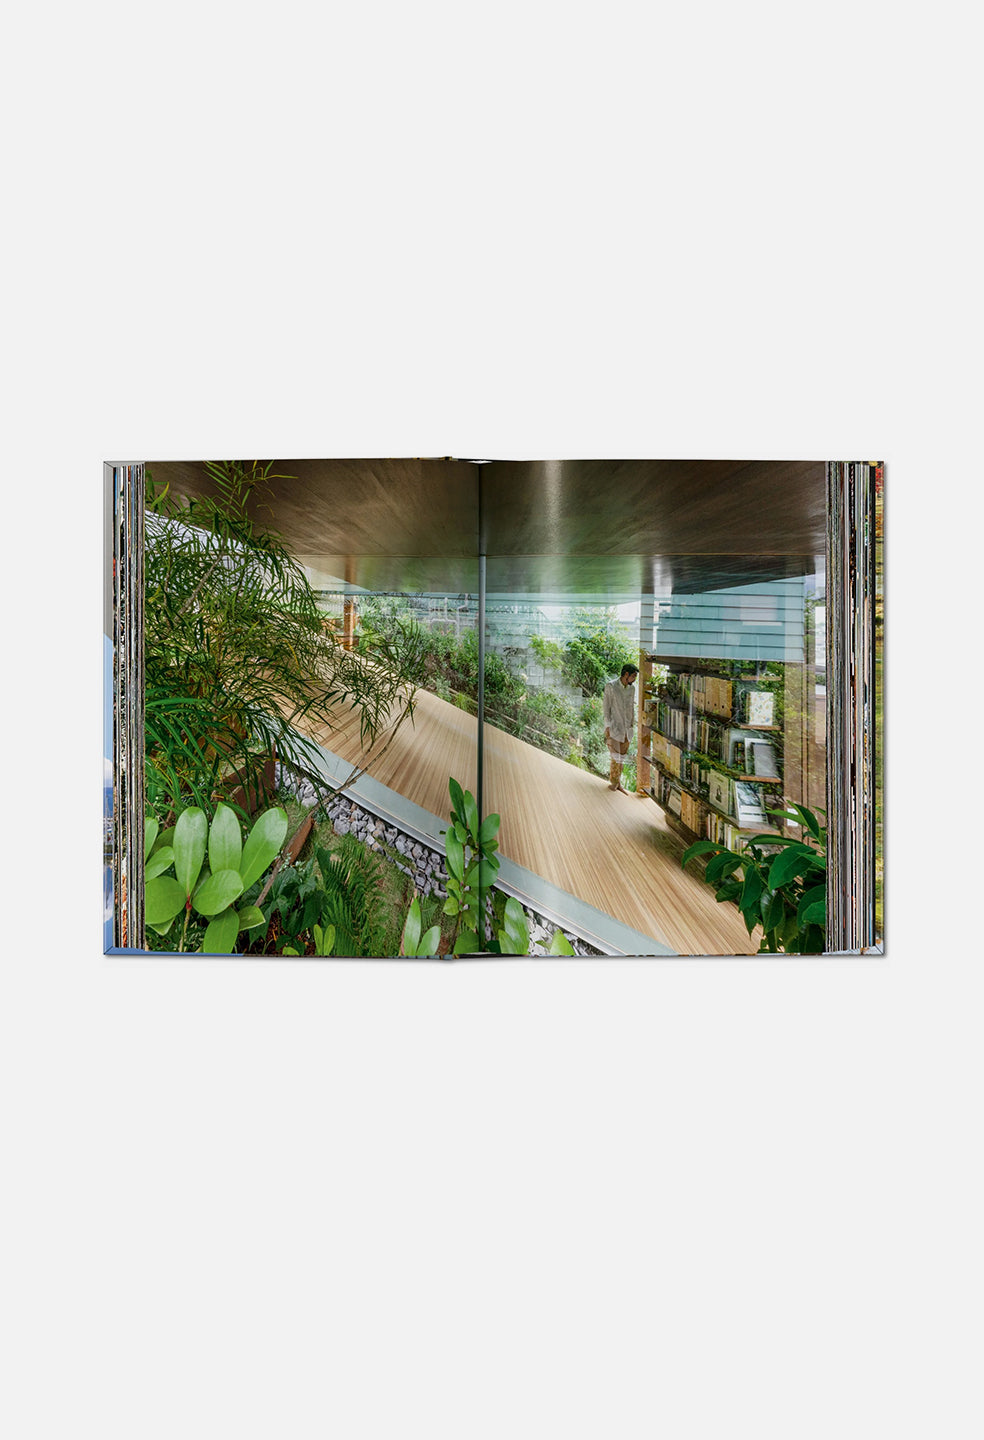 Taschen Books / Contemporary Japanese Architecture. 40th Ed. - JOHN ELLIOTT